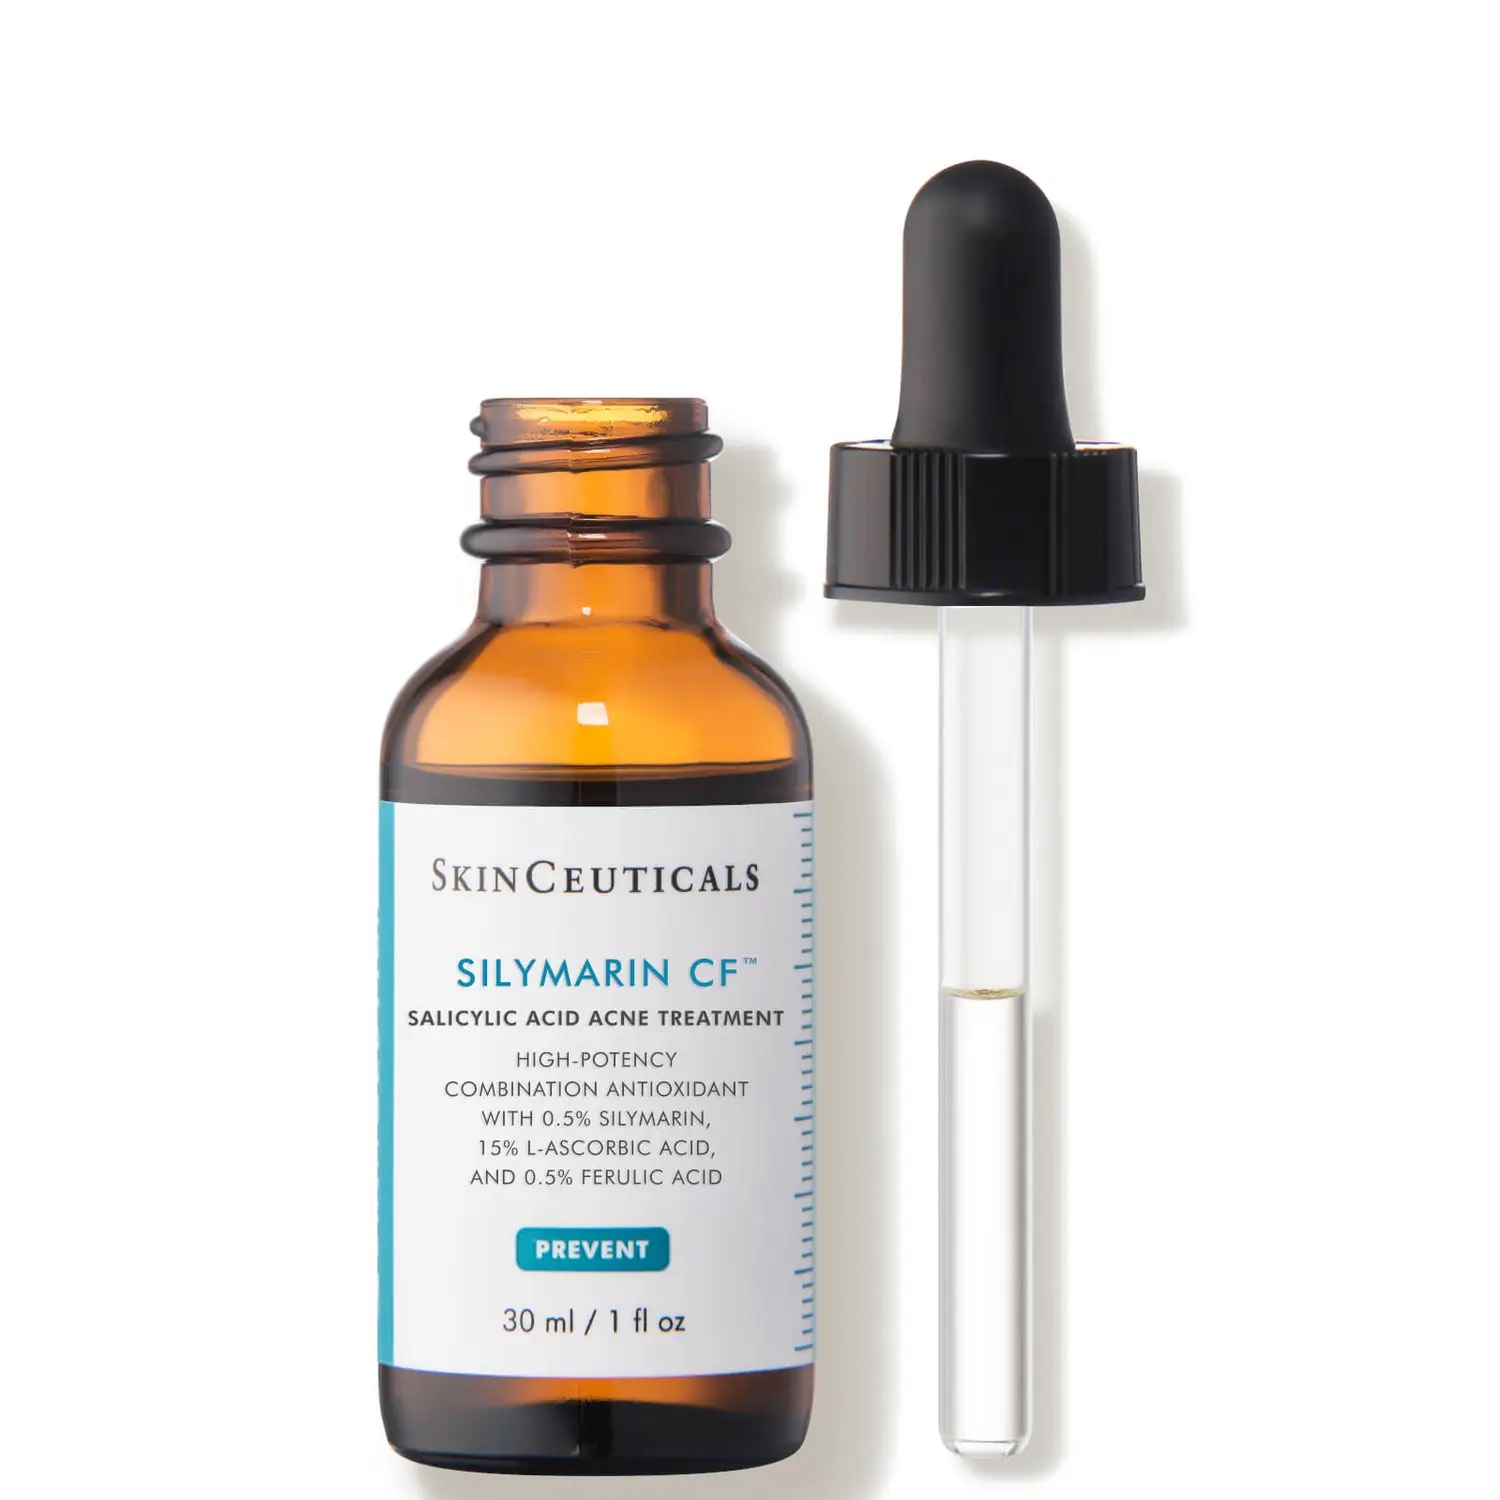 SkinCeuticals Silymarin CF, clear clogged pores